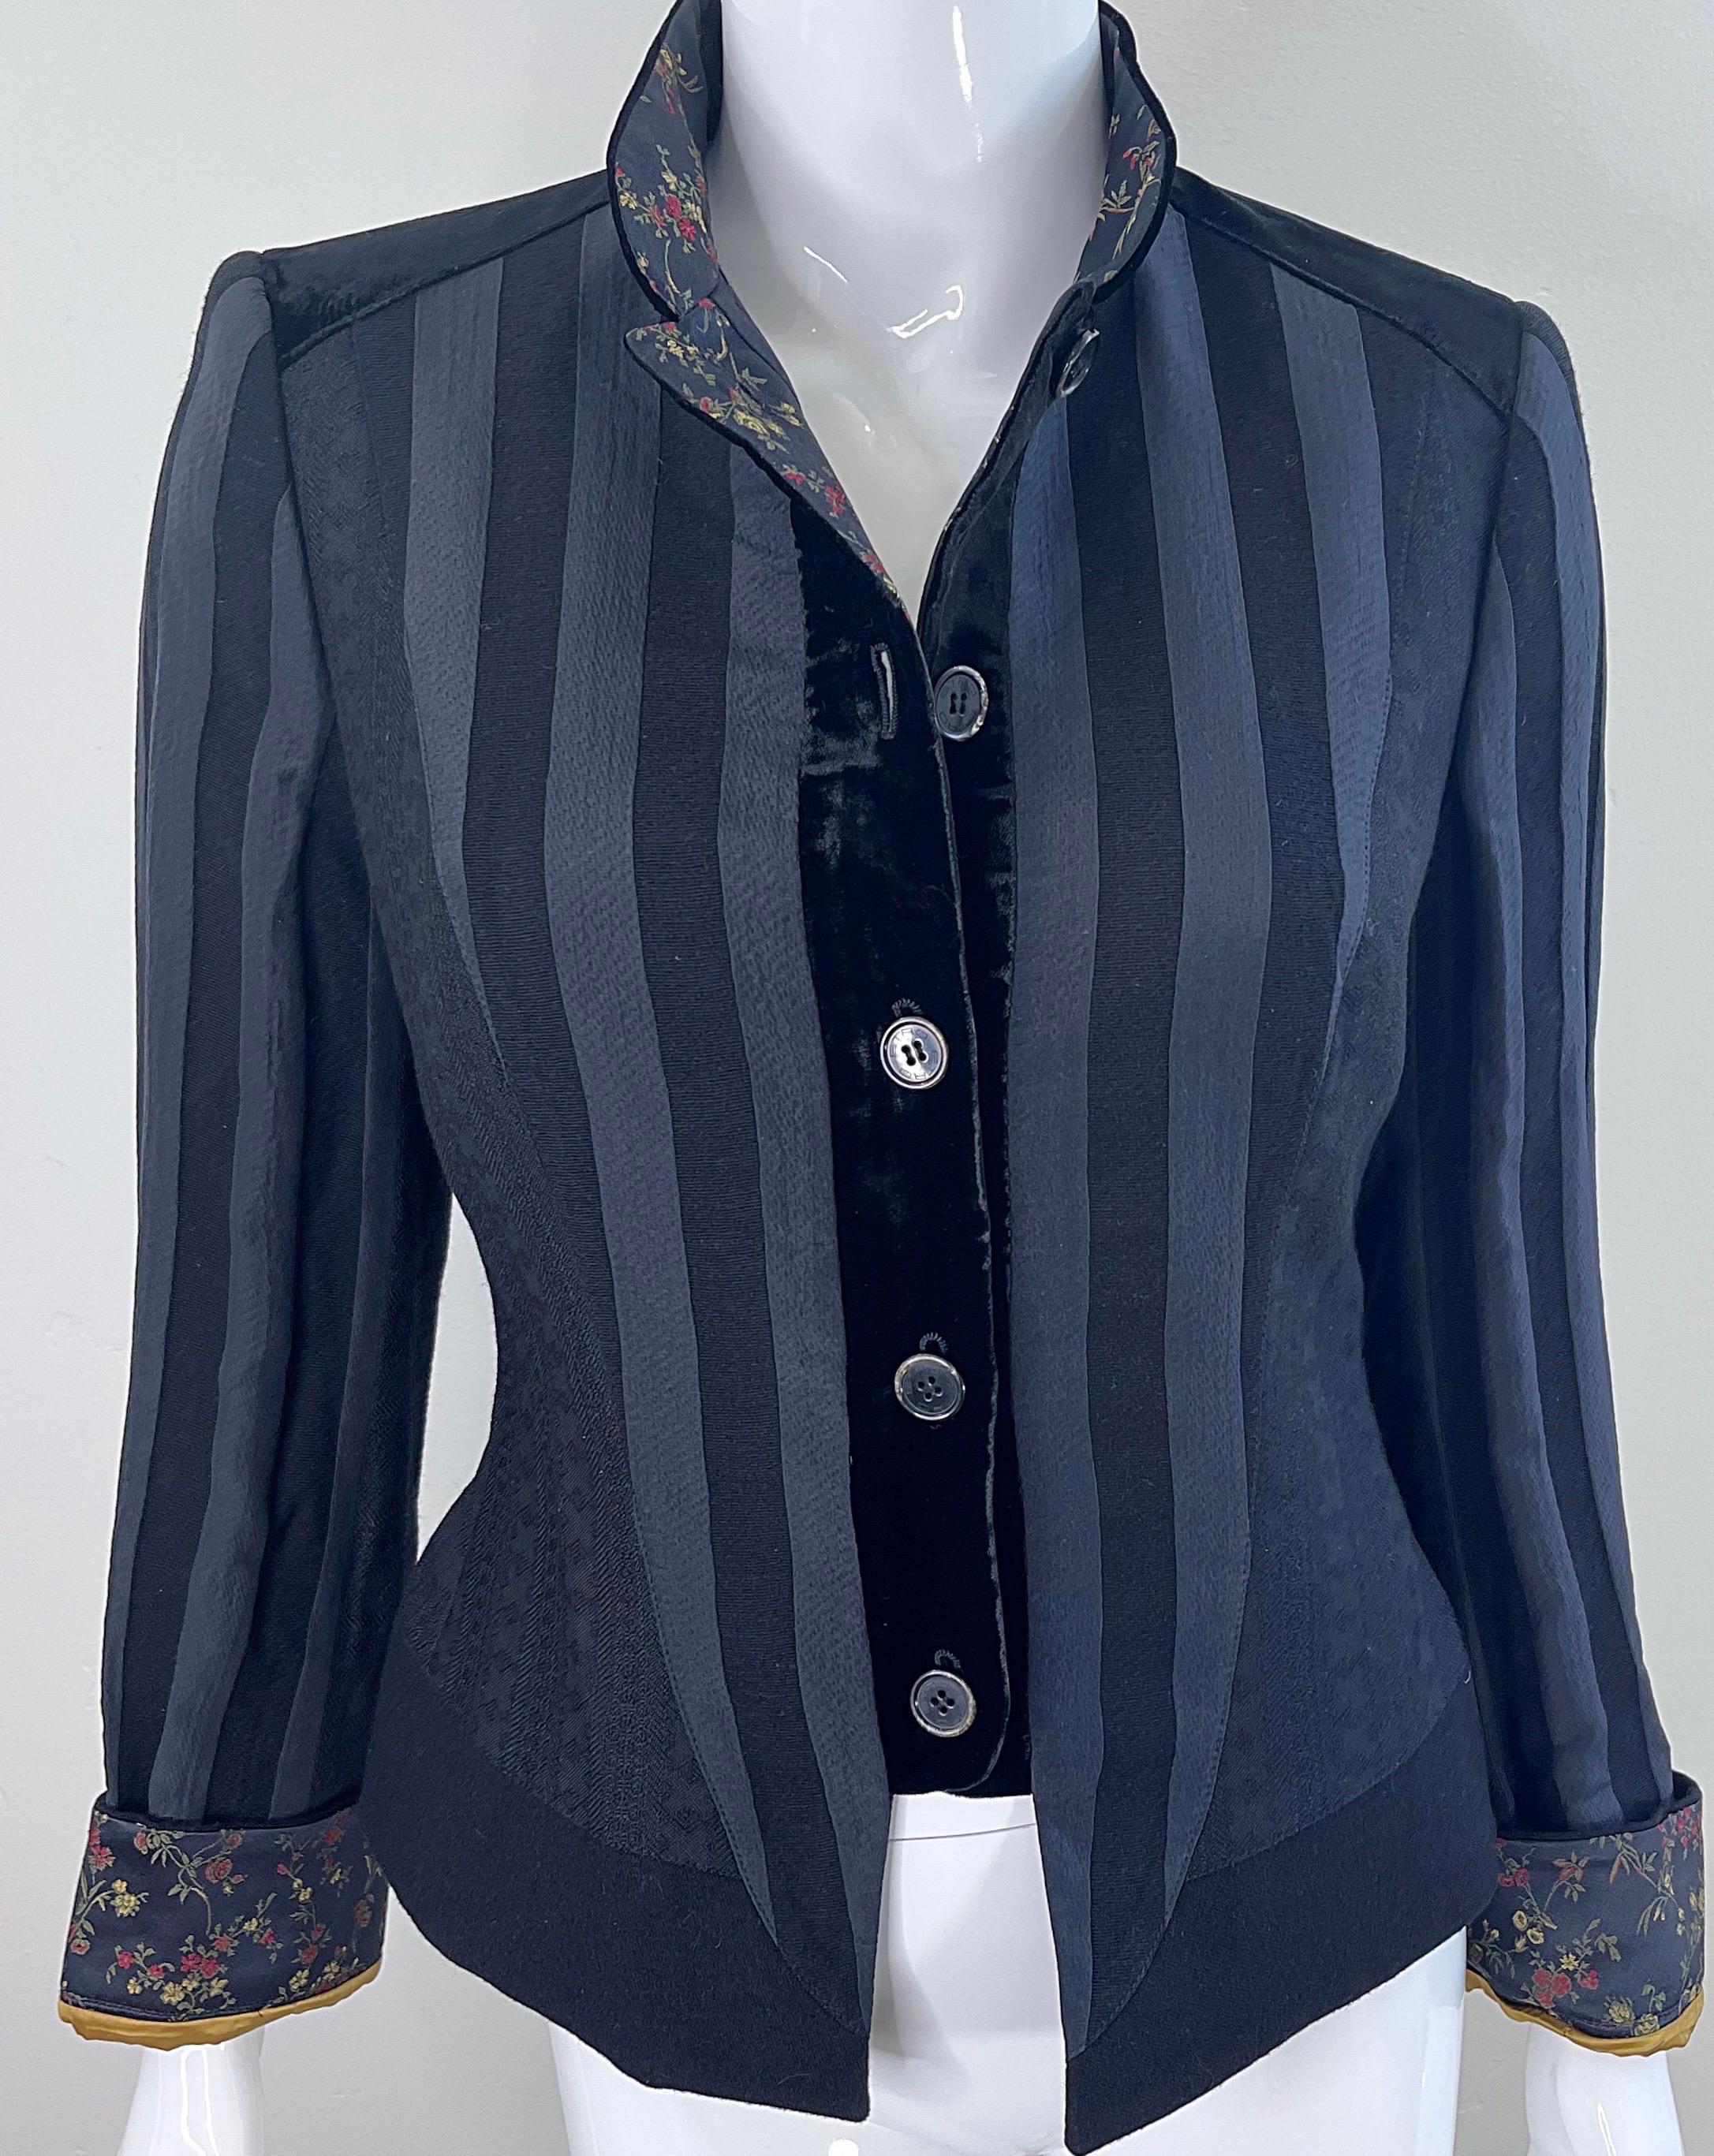 Etro Black Silk Blend Size 44 / US 8 Military Inspired Jacket w/ Flower Cuffs For Sale 3